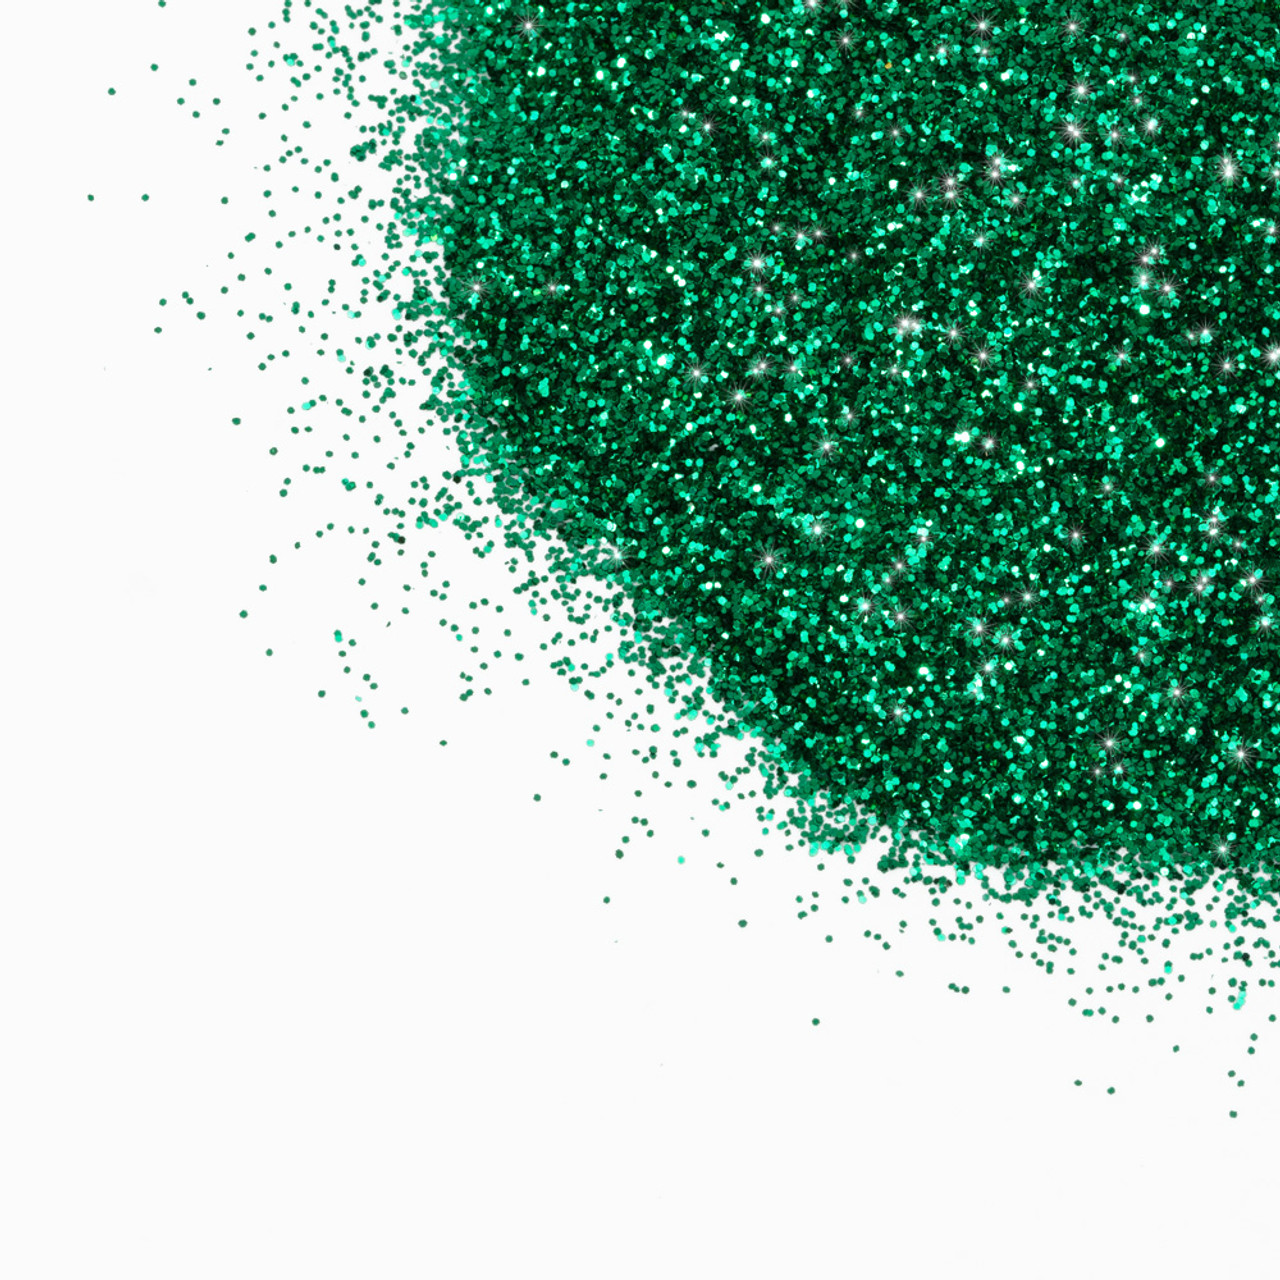 LeChat EFFX Glitter Emerald Green - 20 grams